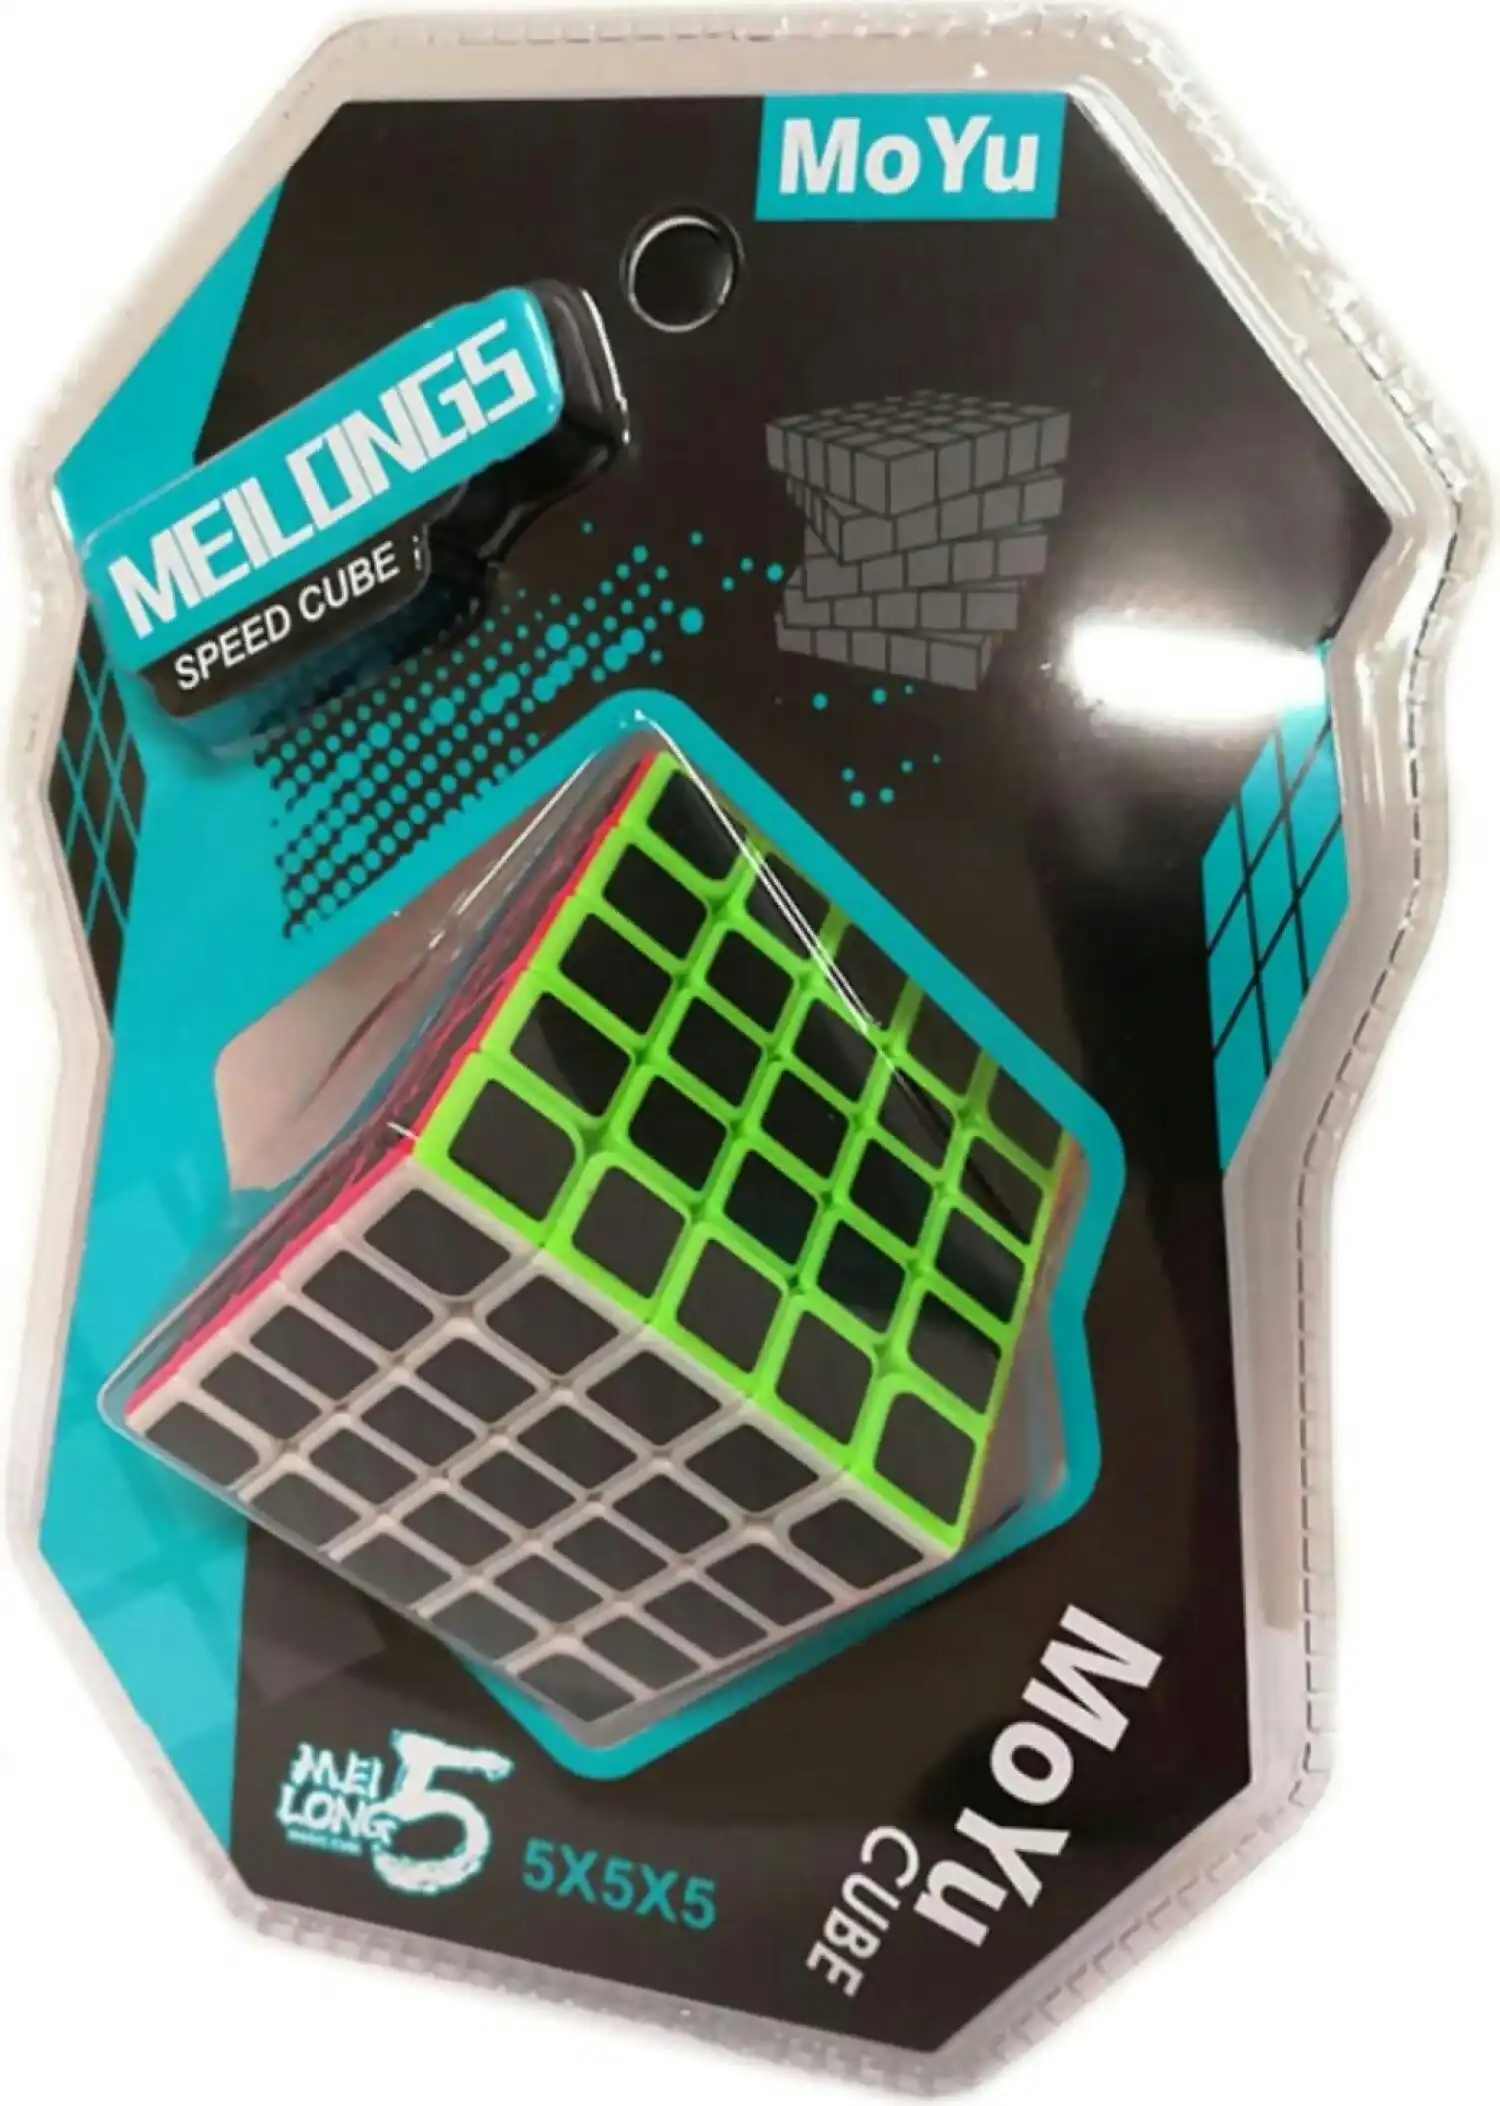 MoYu - Meilong 5 X 5 Speed Cube Blister Pack